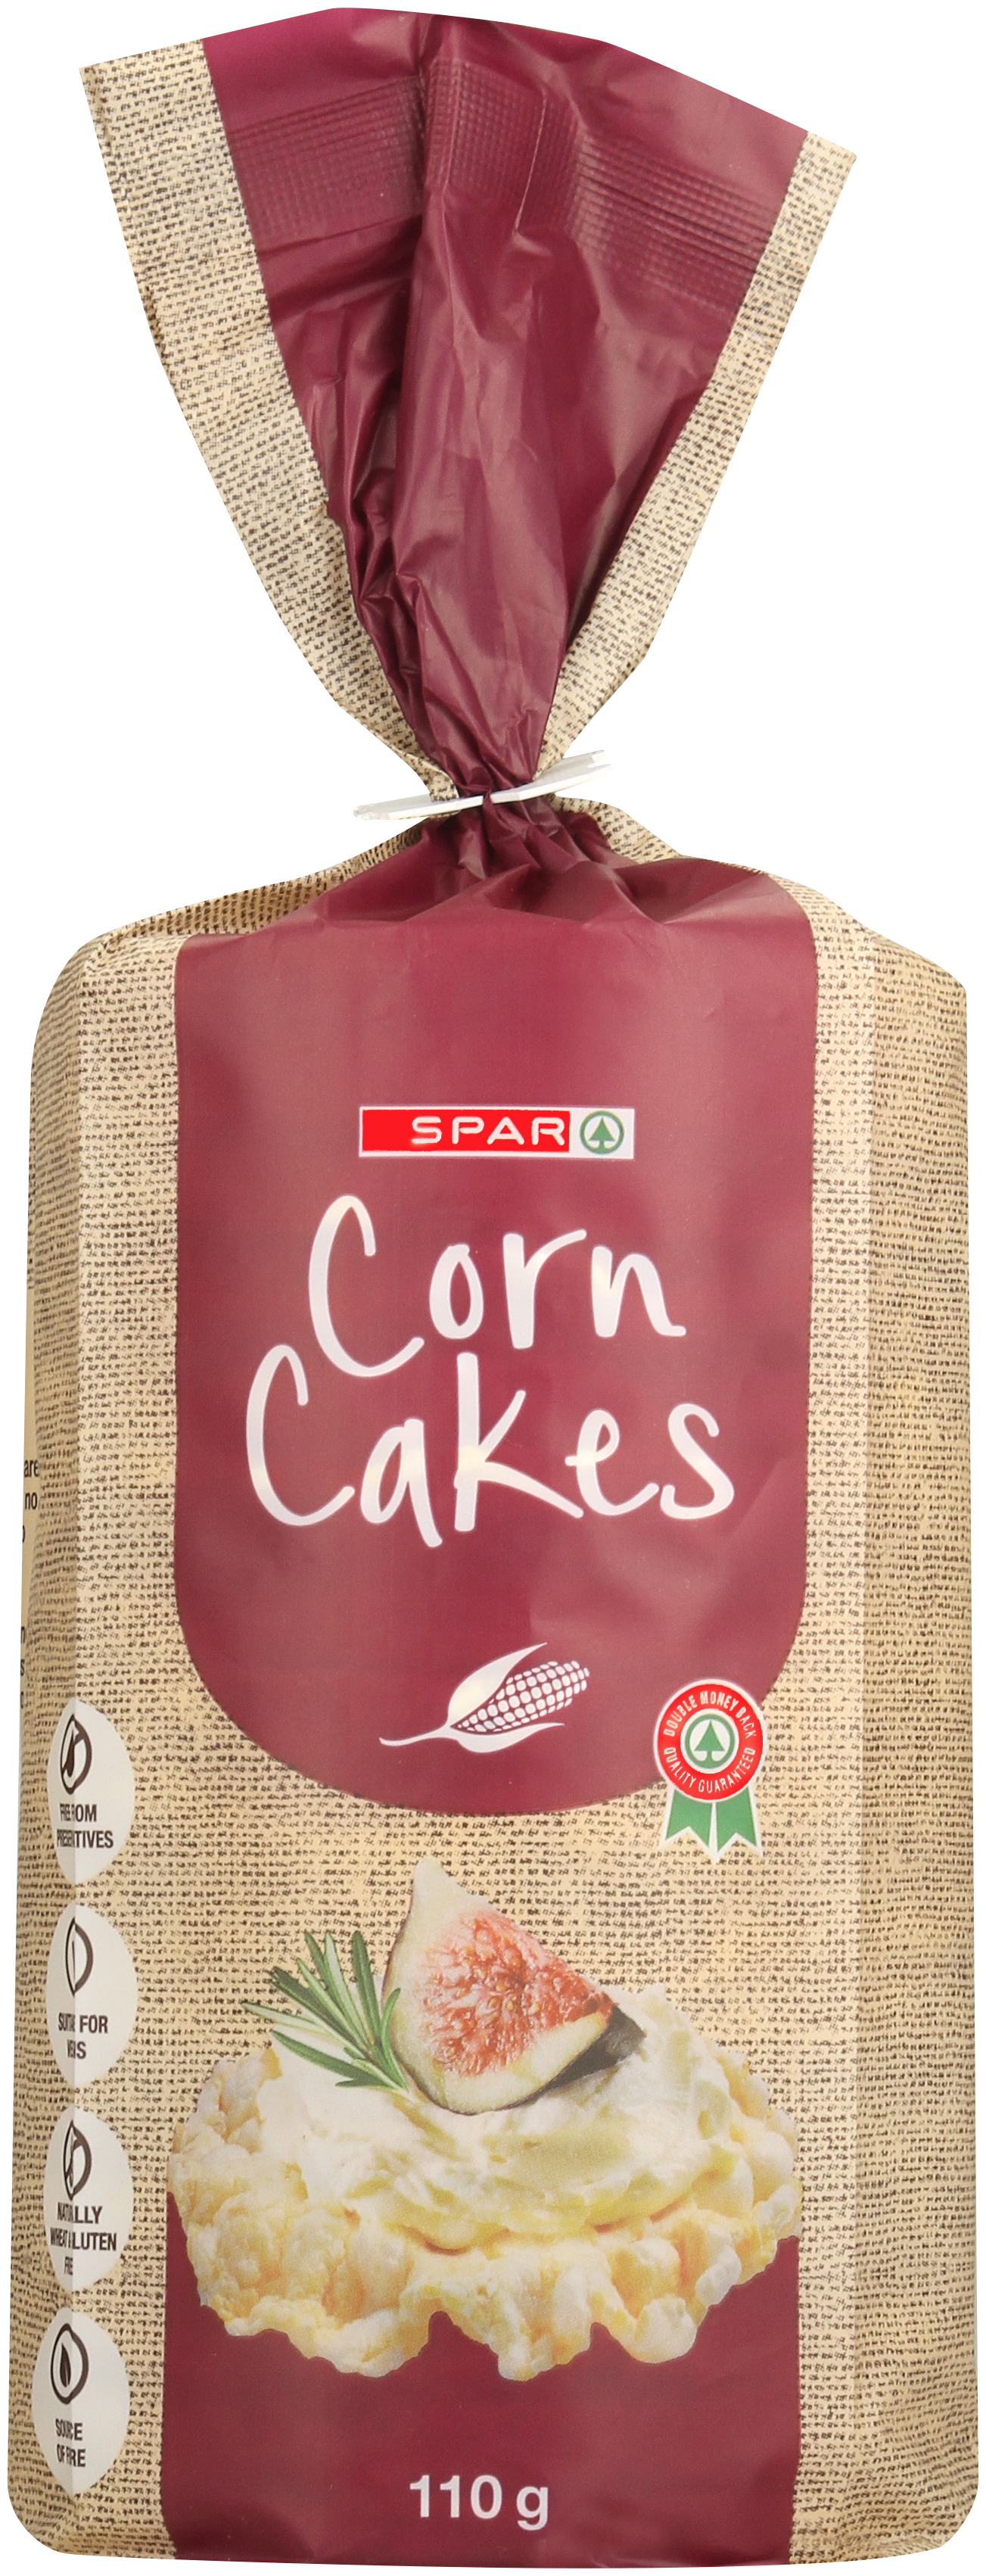 corn cakes